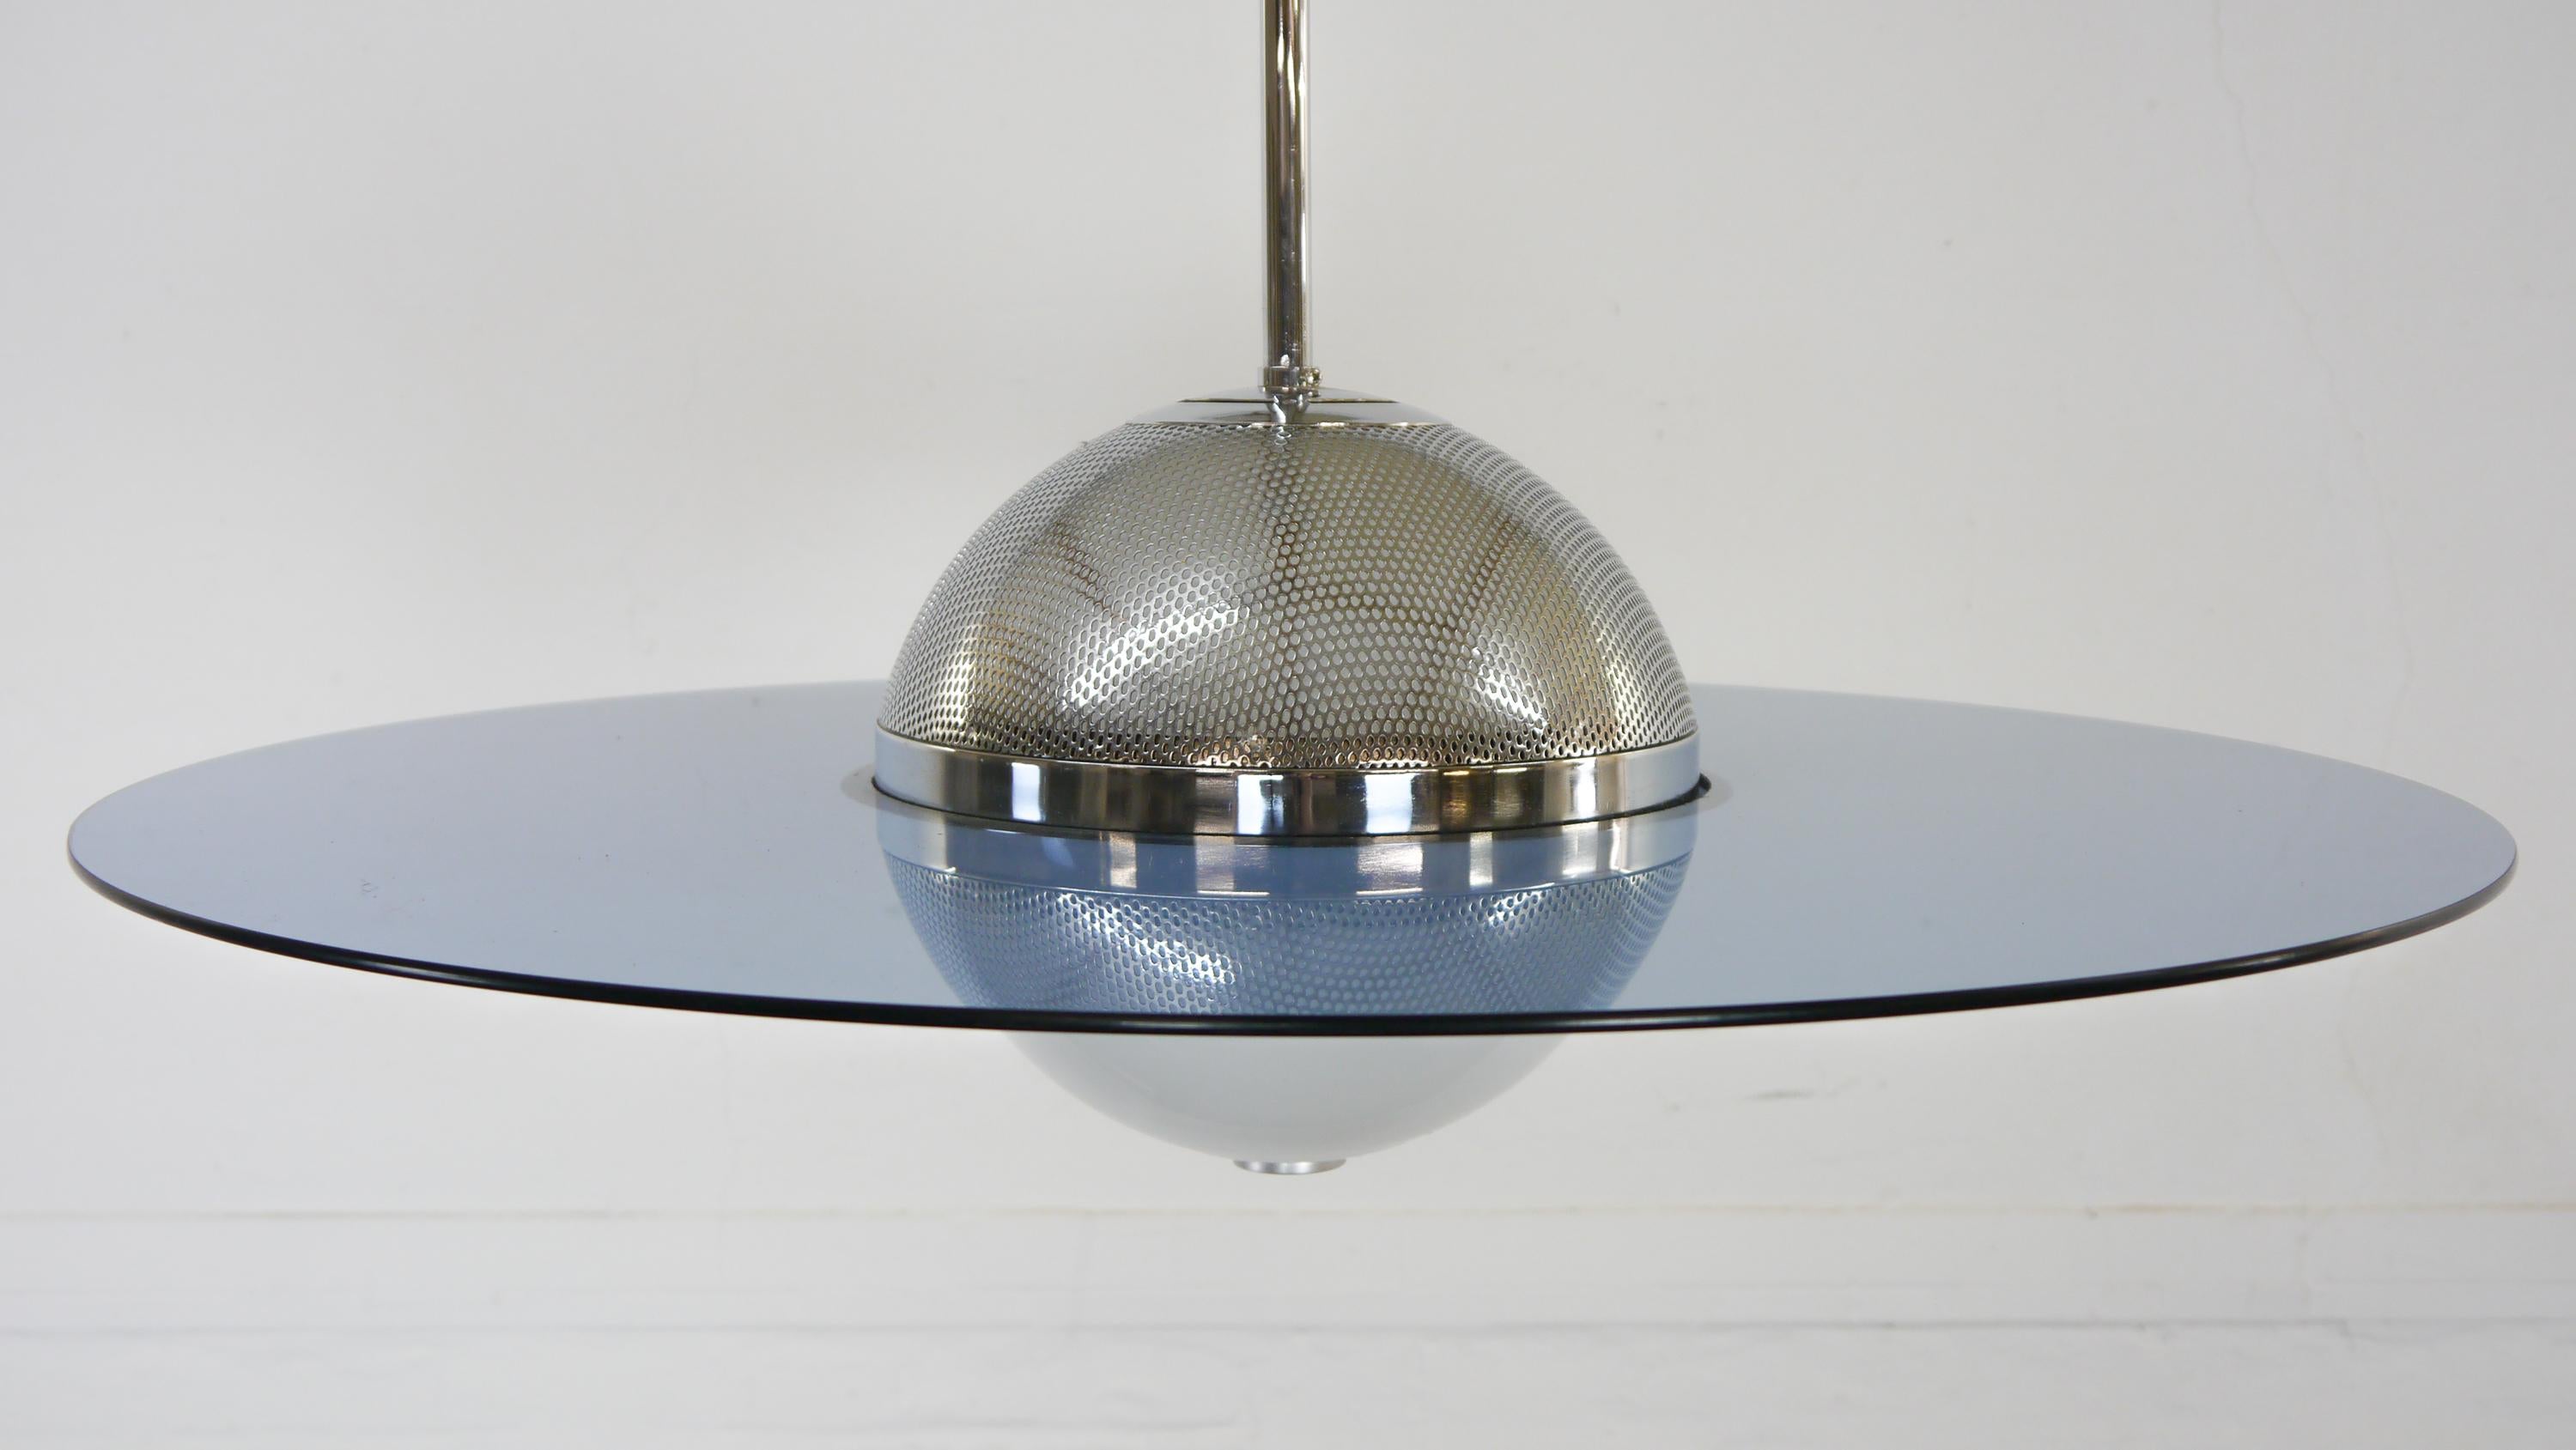 Stunning chandelier / Pentant Saturn lamp
Model: 